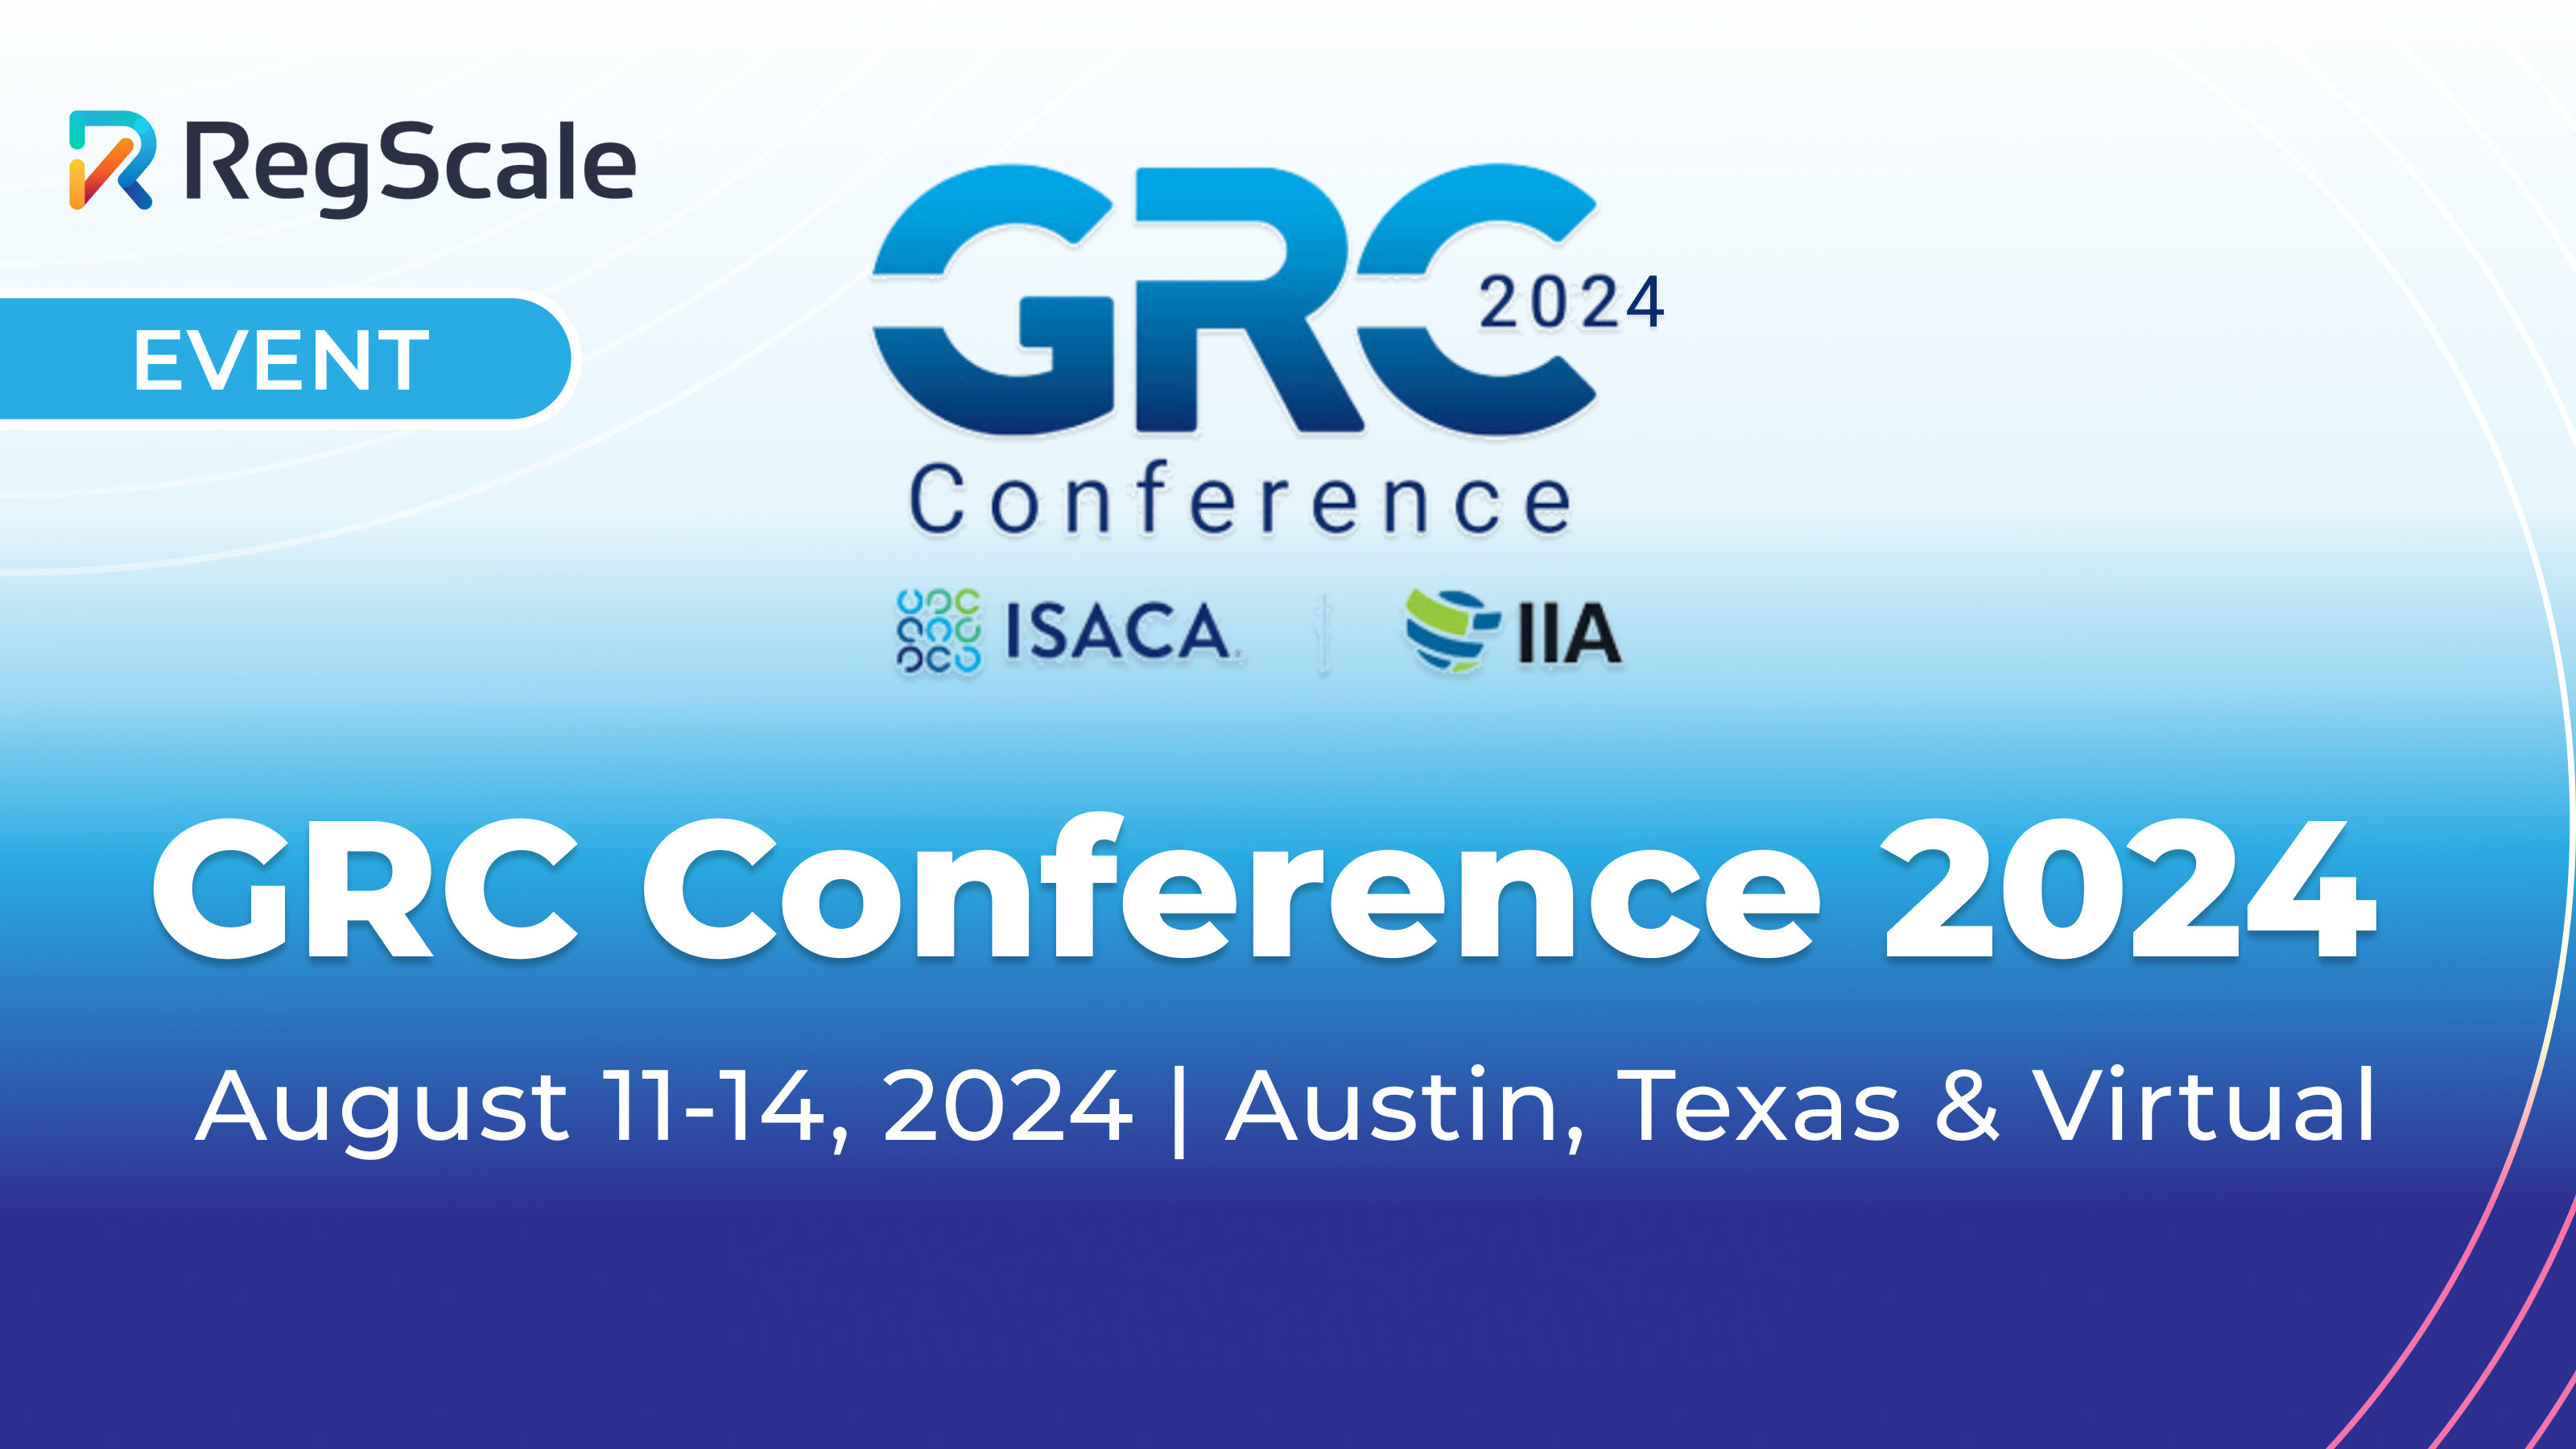 See you soon at ISACA GRC Conference 2024!